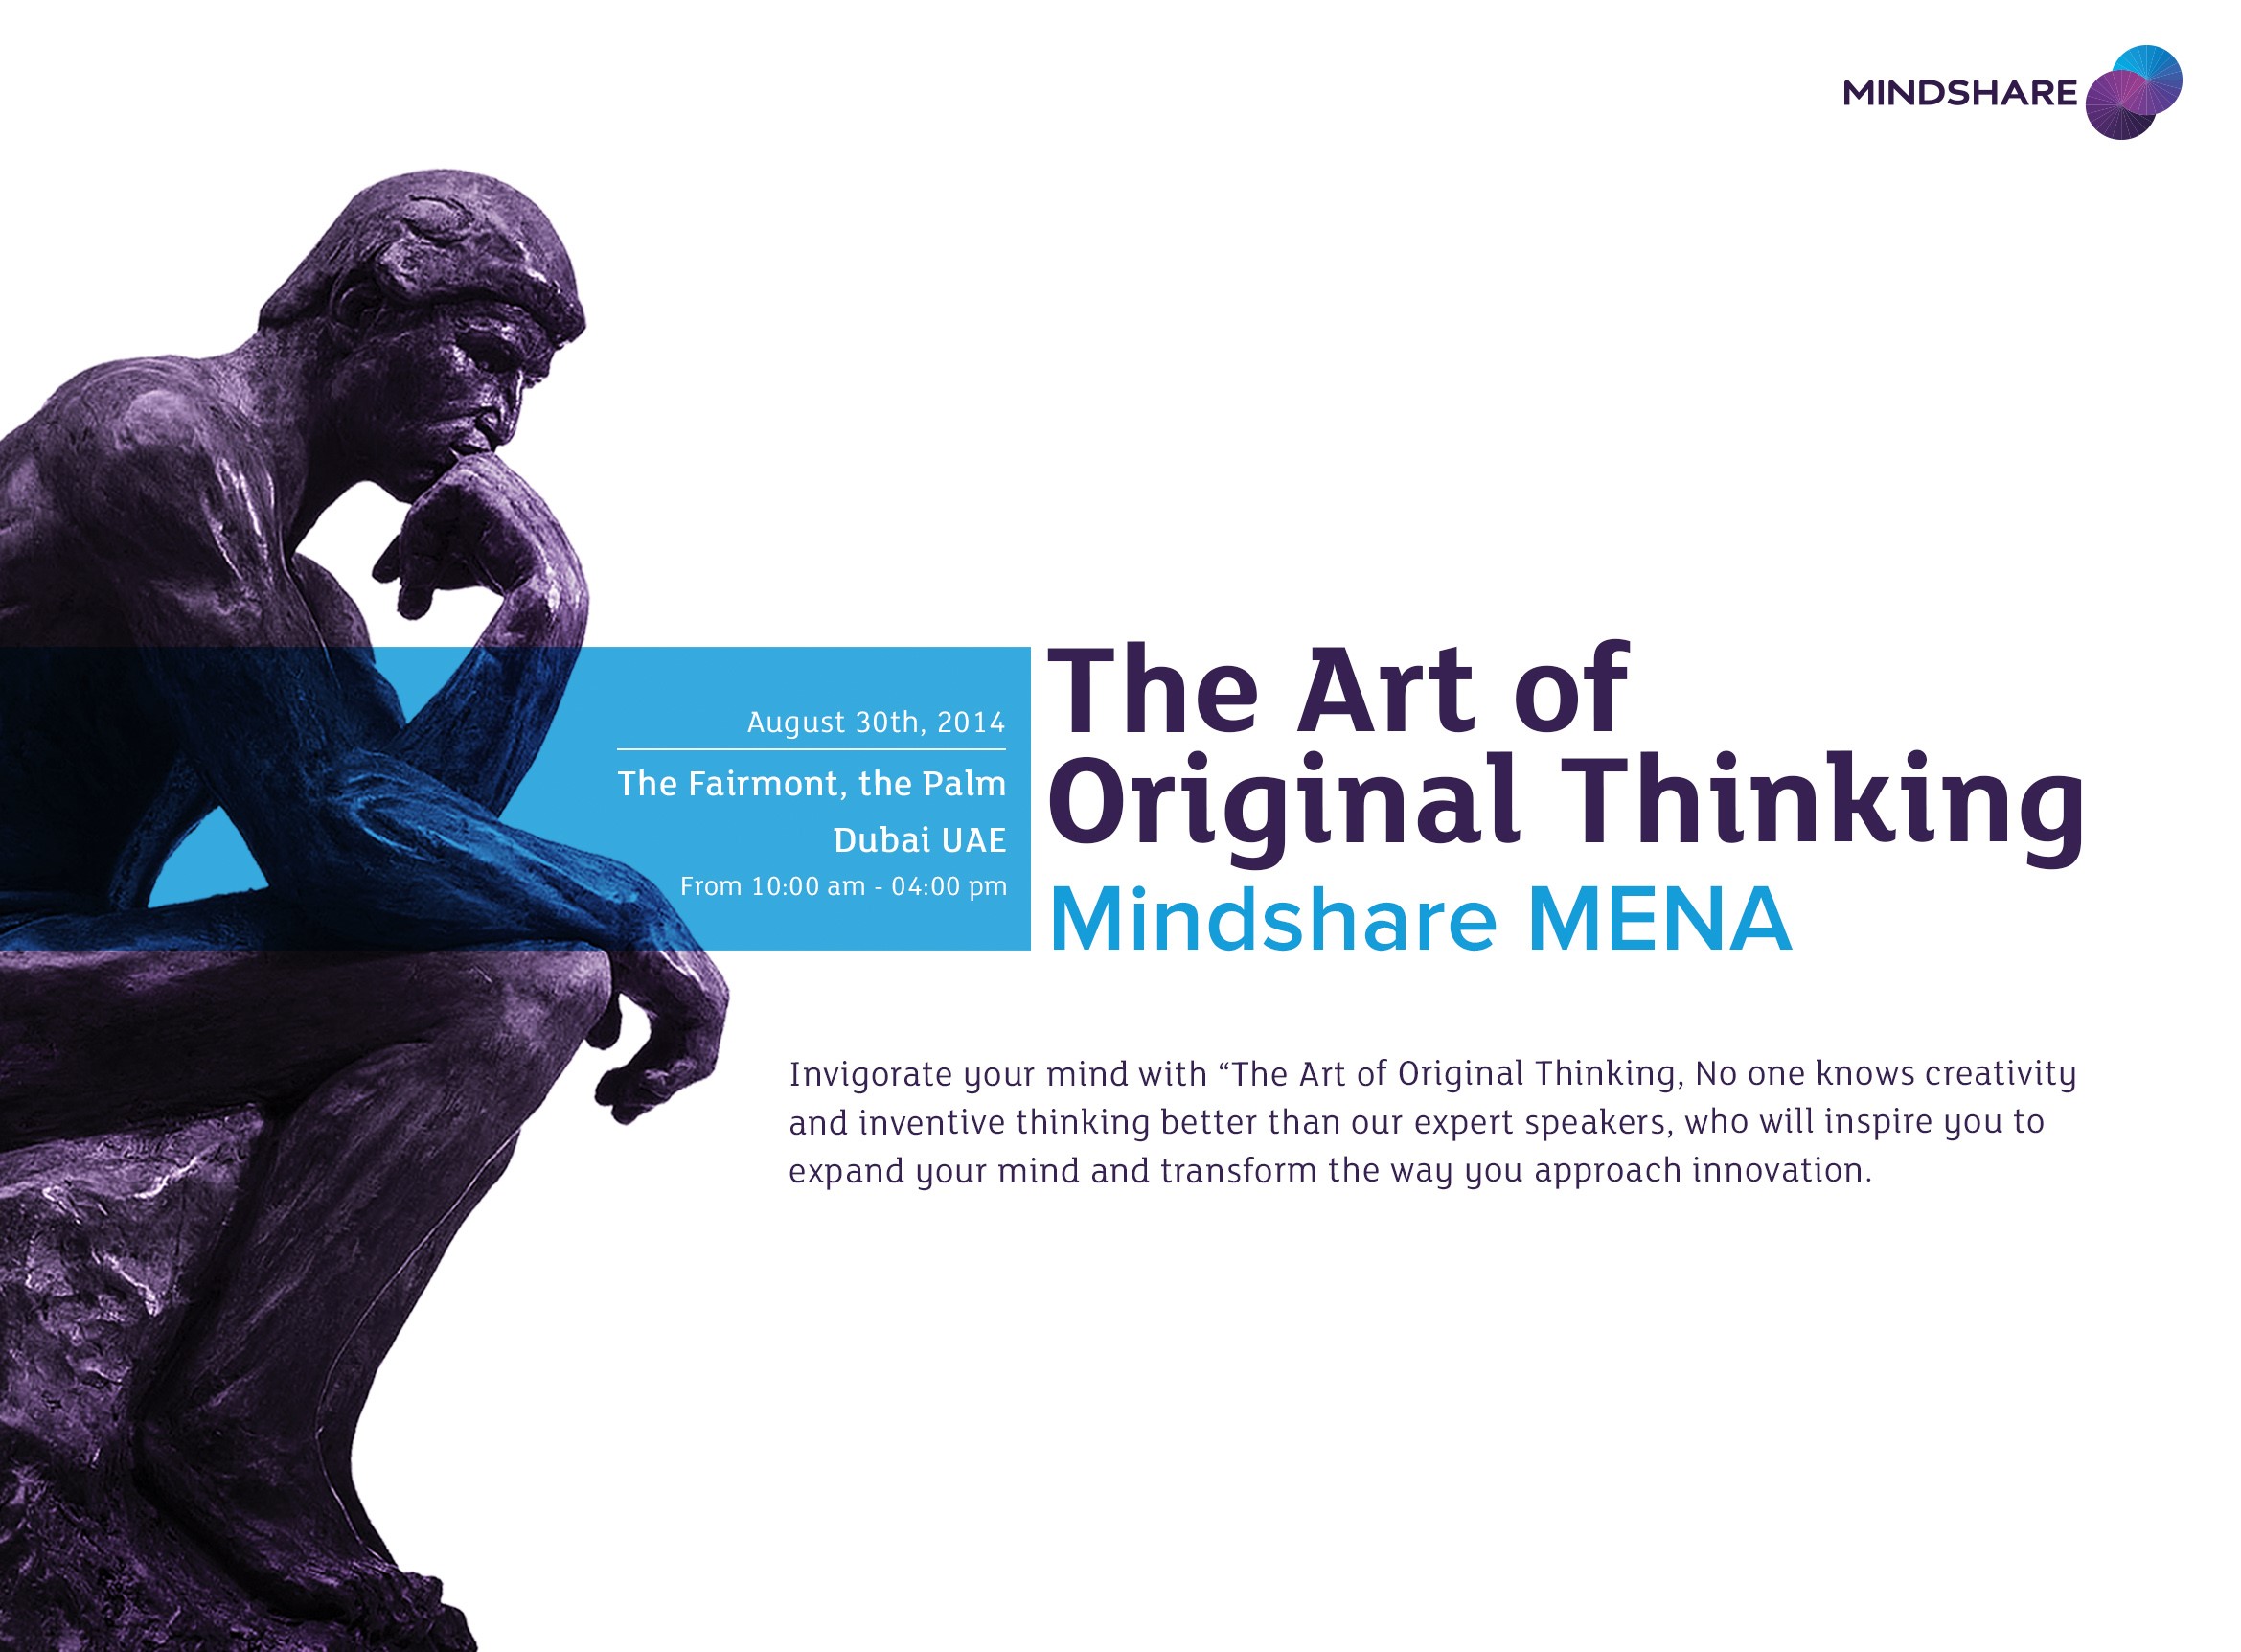 Mindshare’s “The Art of Original Thinking” comes to Dubai